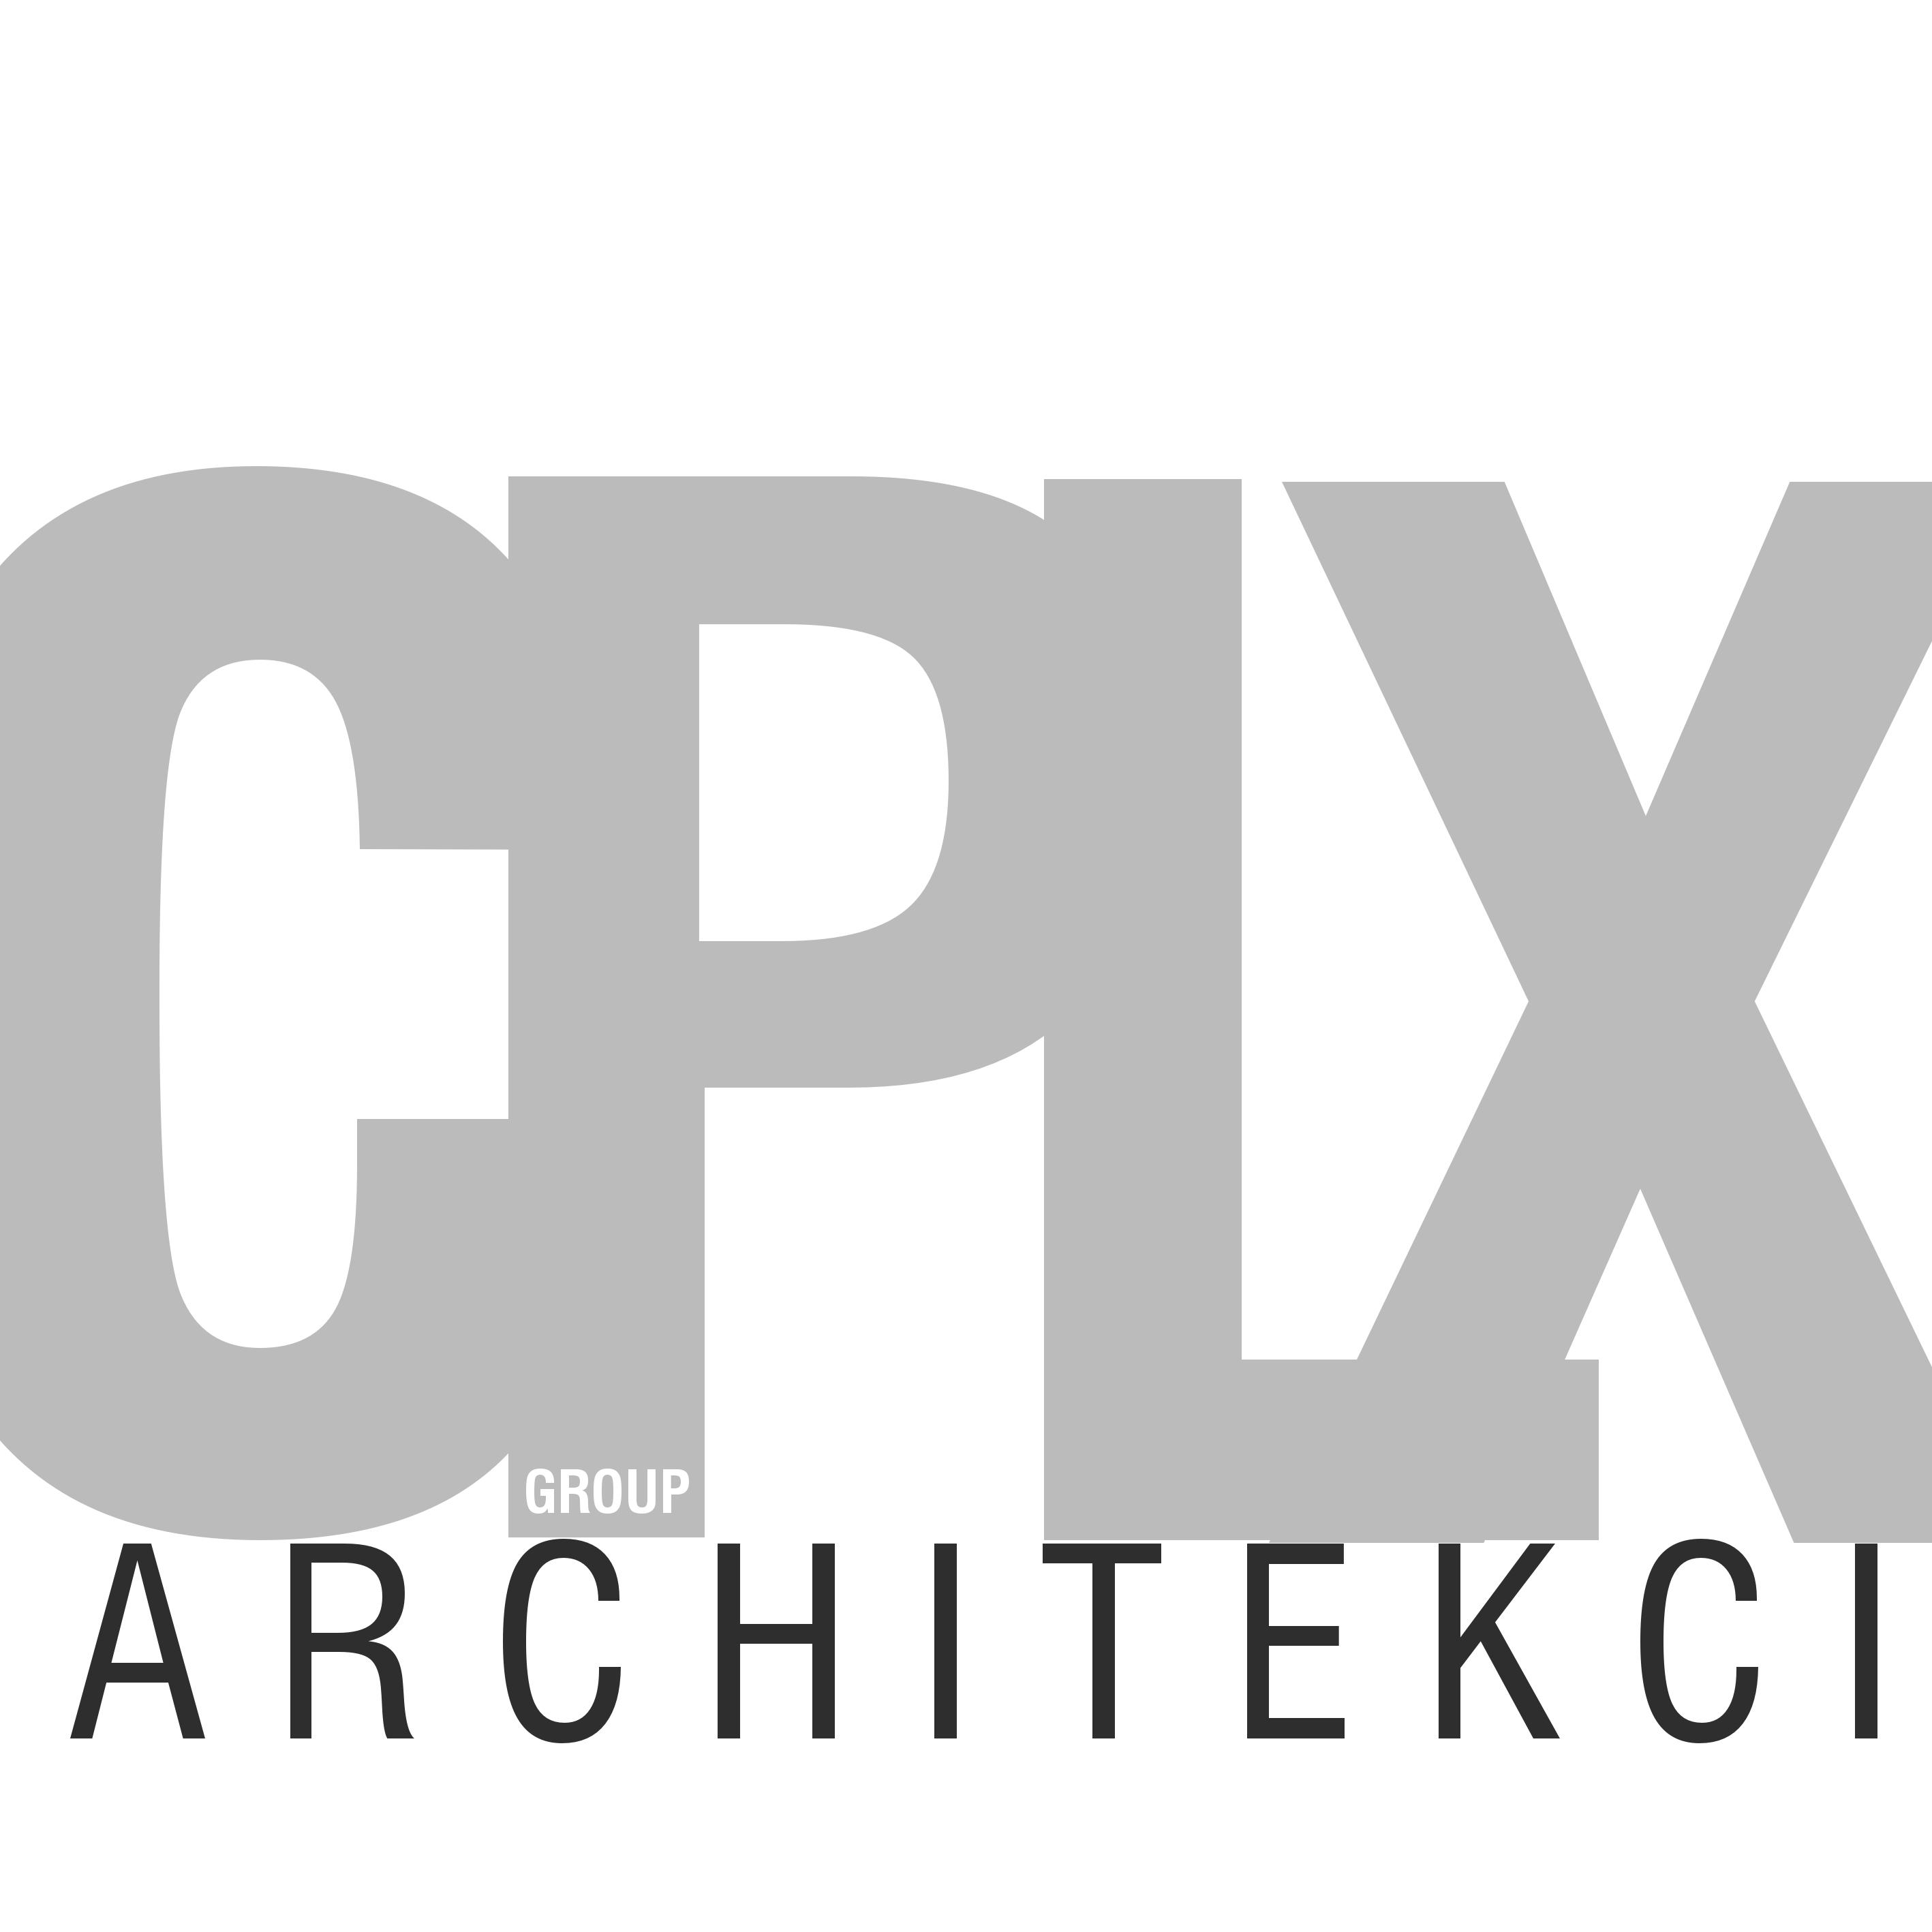 CPLX Architekci